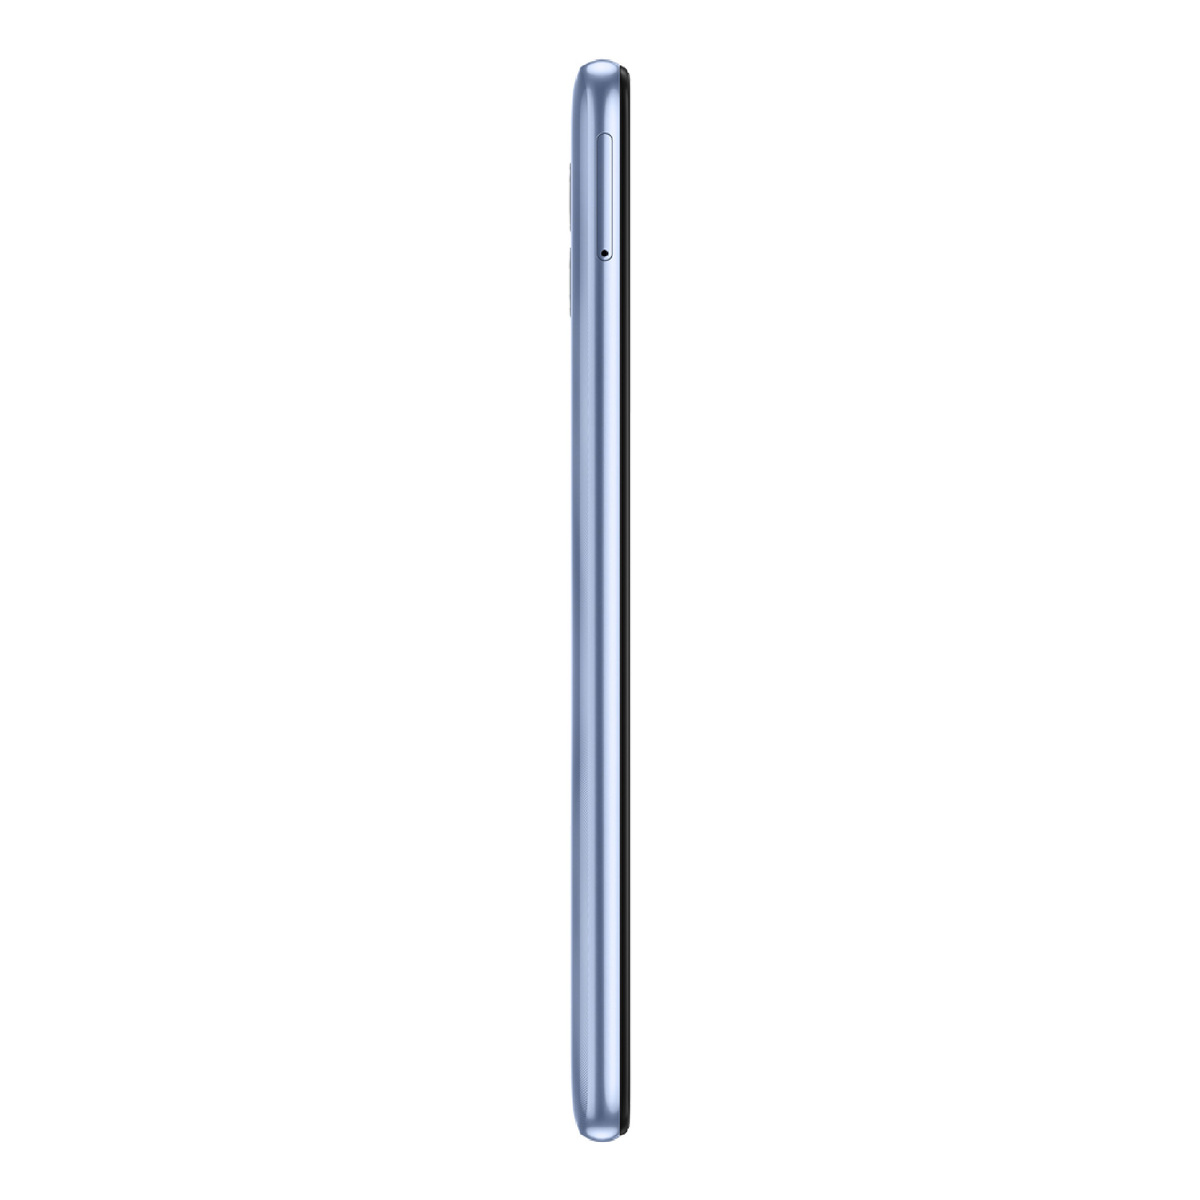 Samsung Galaxy A04e Dual SIM 4G Smartphone, 3GB RAM, 32GB Storage, Light Blue